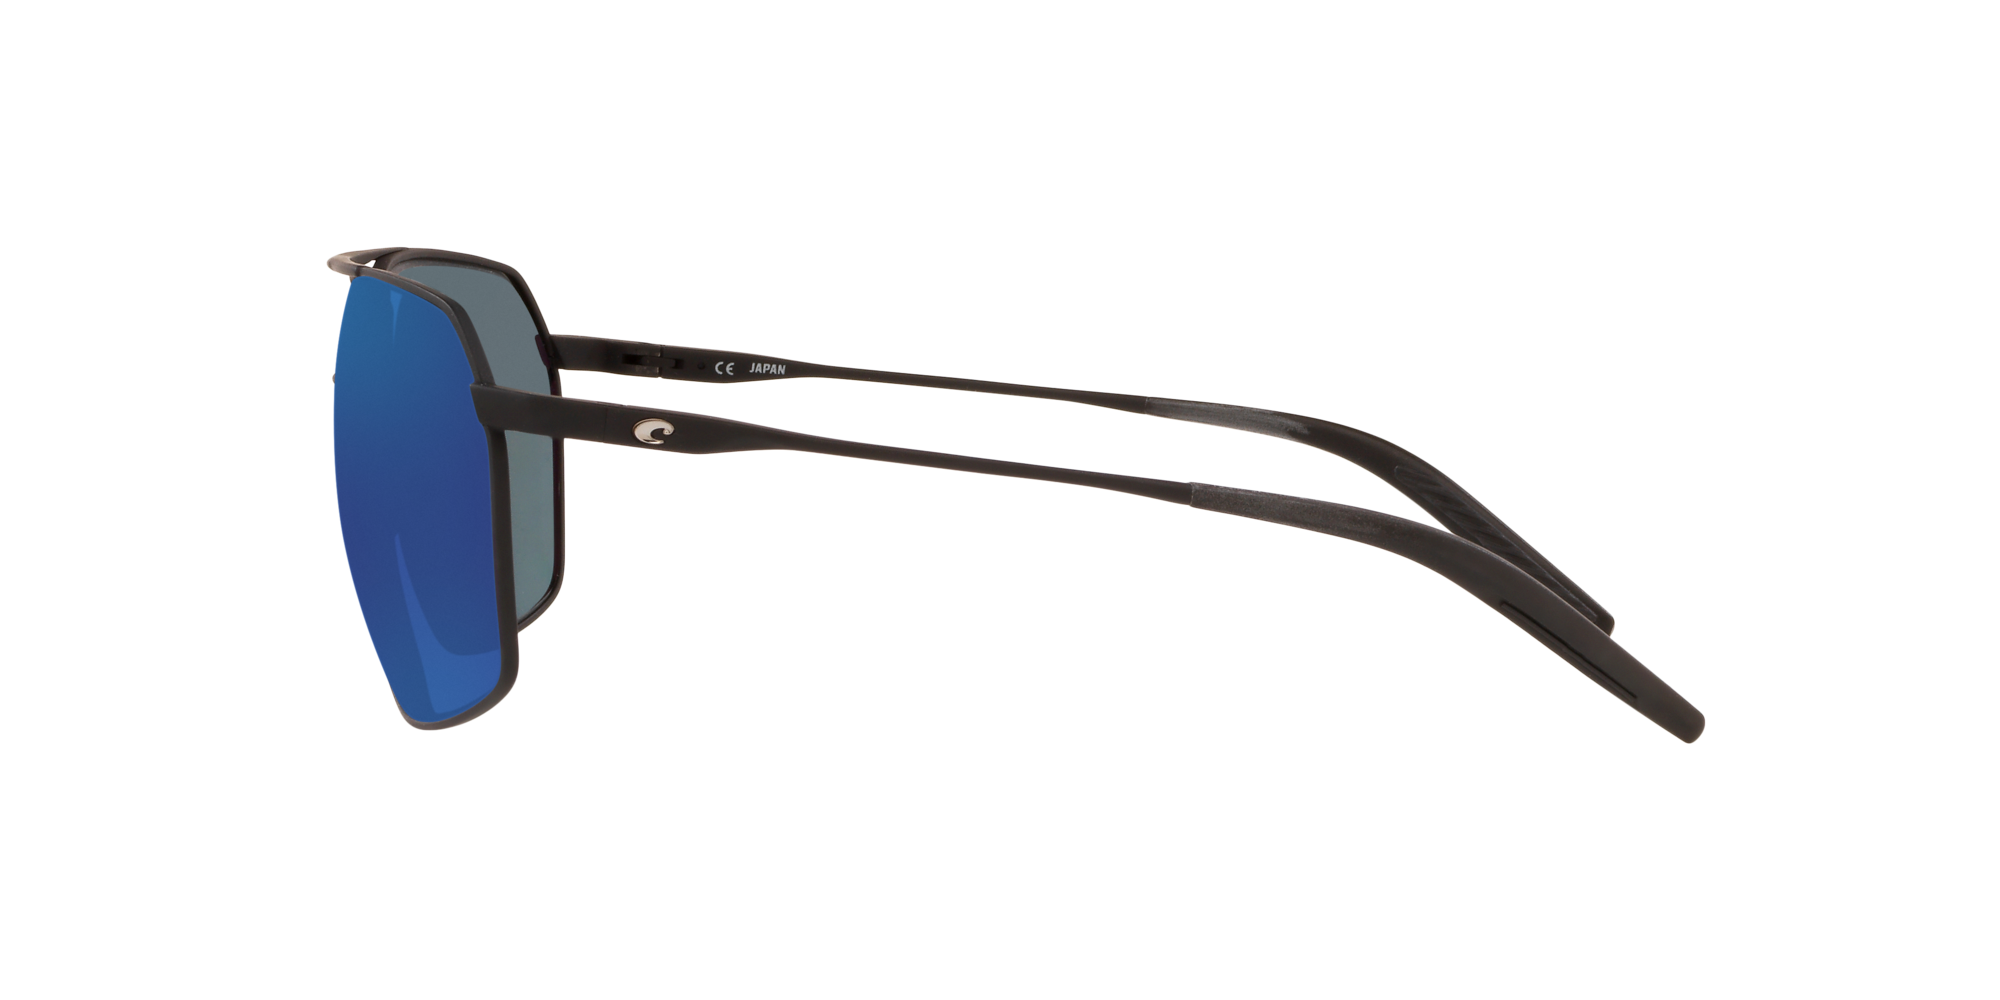 New Costa Del Mar Fishing Sunglasses PILOTHOUSE Matte Black Titanium Sunrise